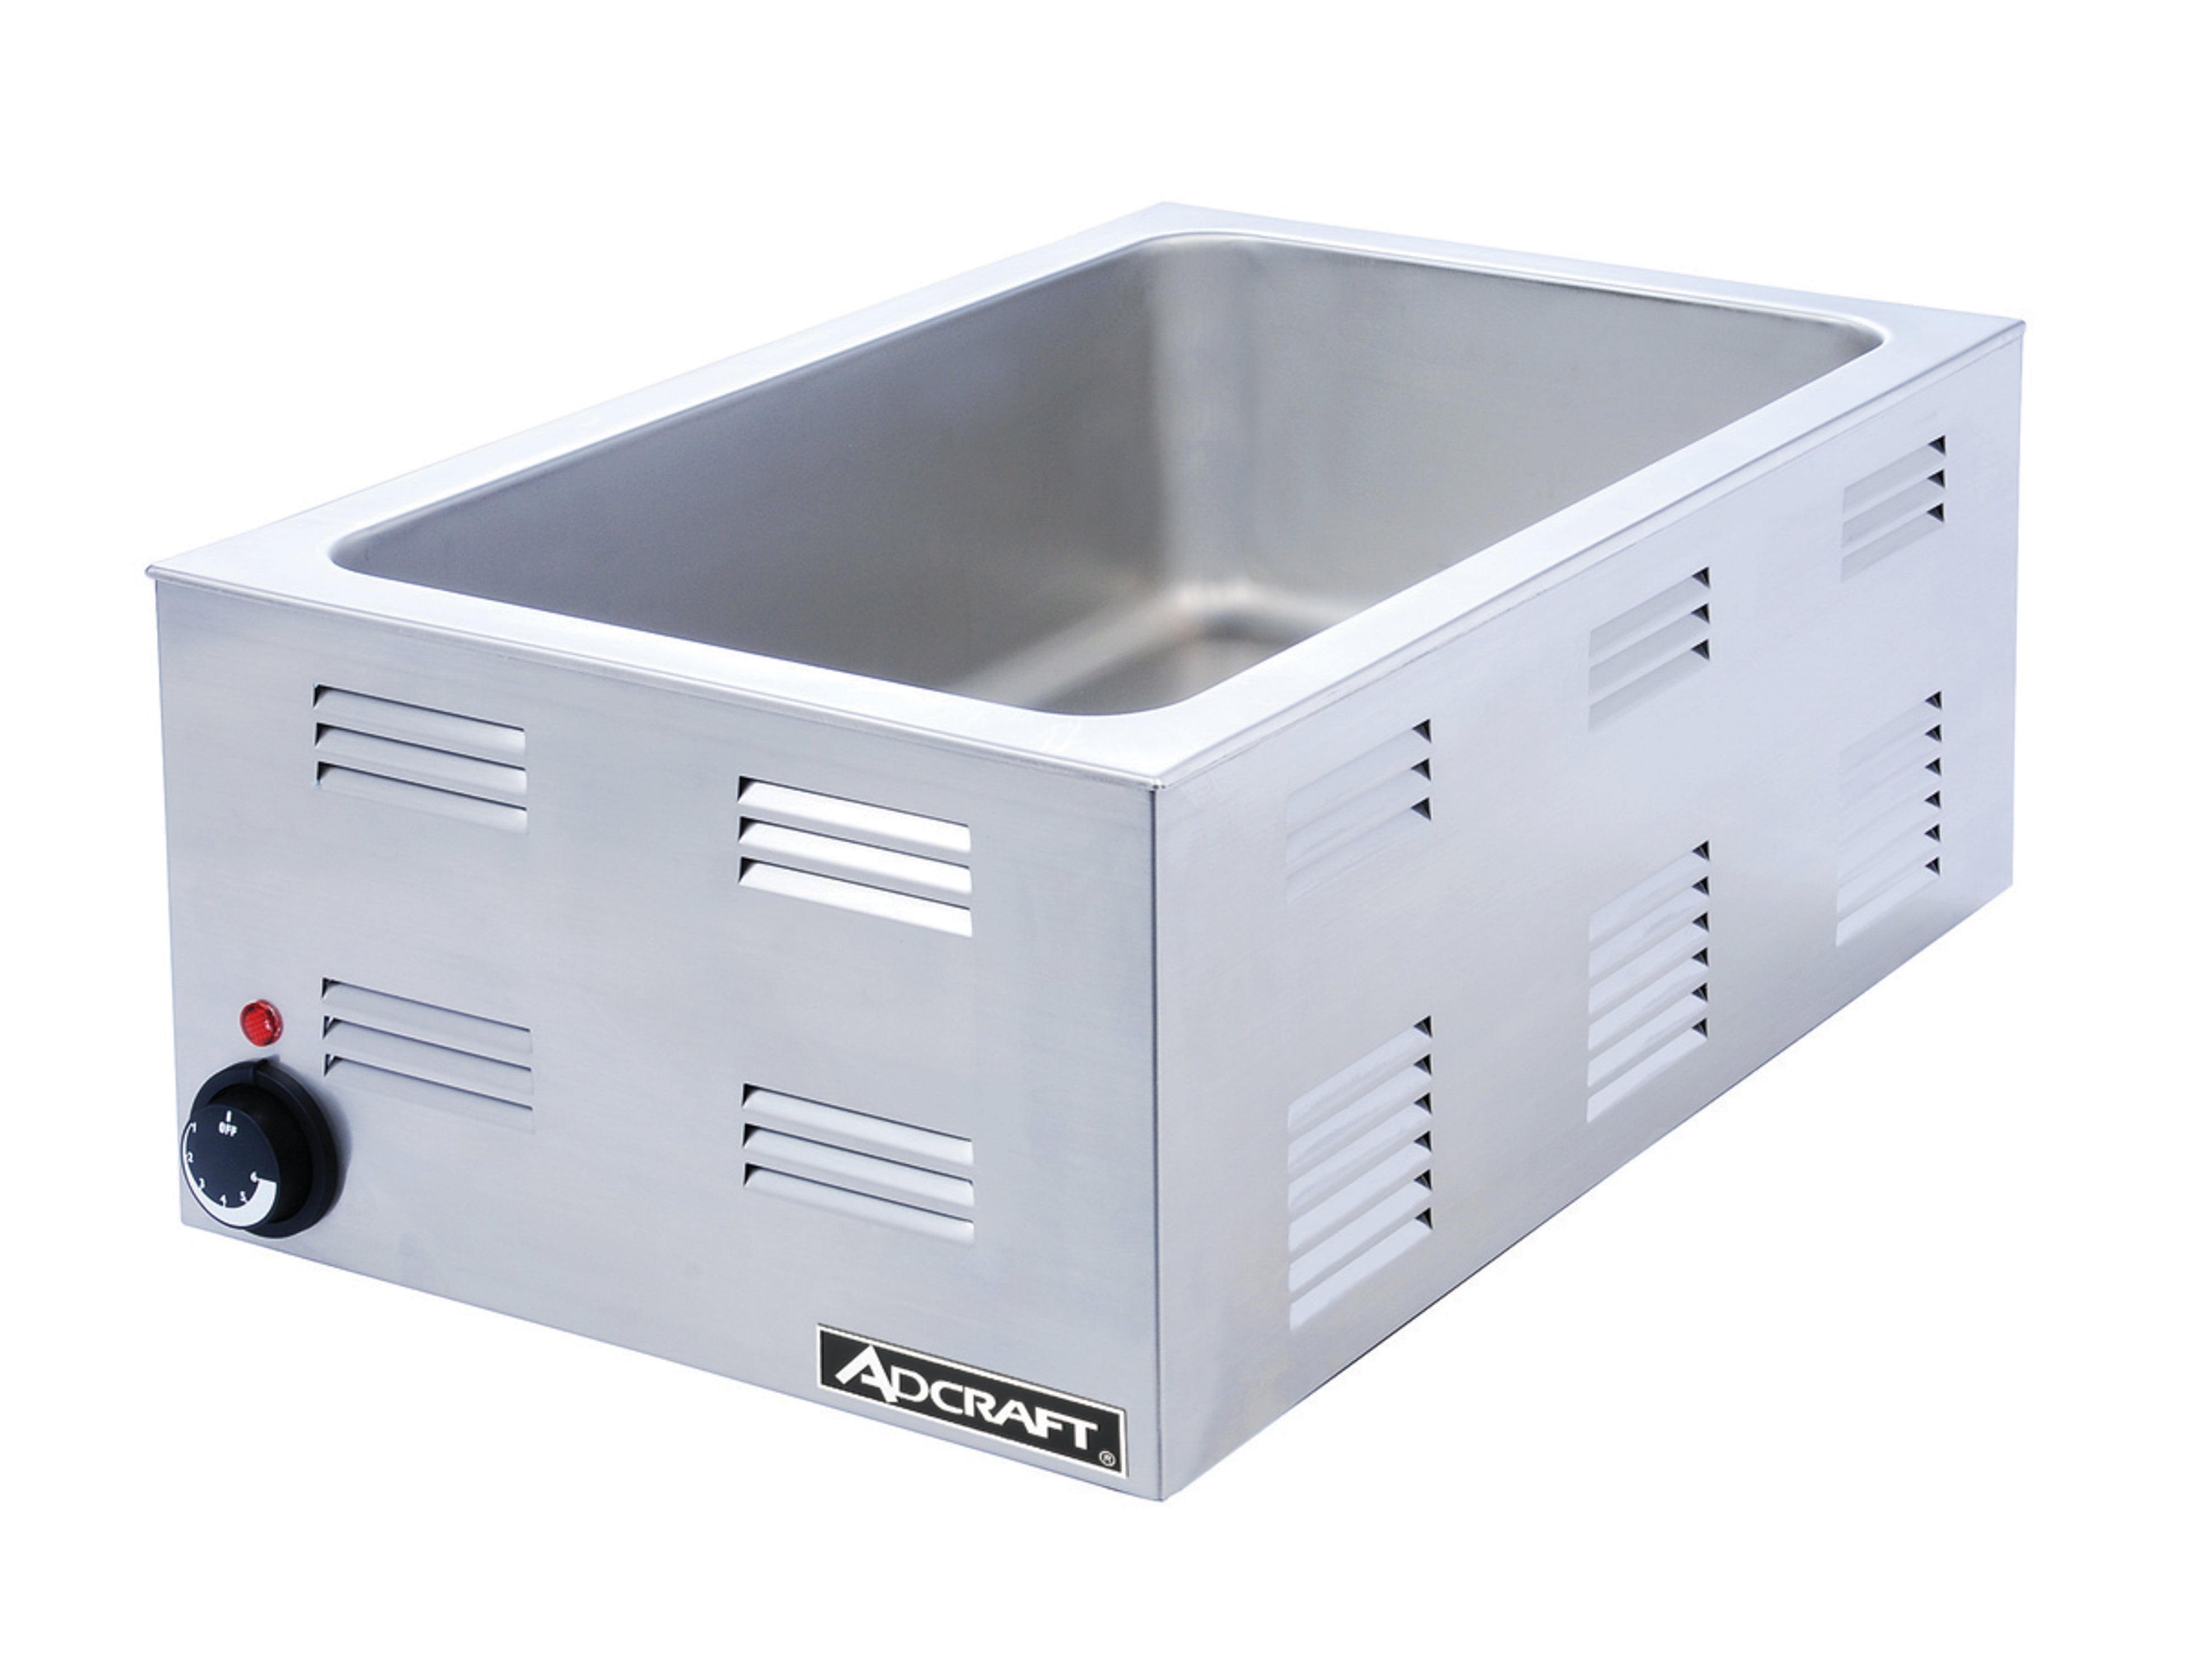 Adcraft FW-1200W Food Pan Warmer, Countertop